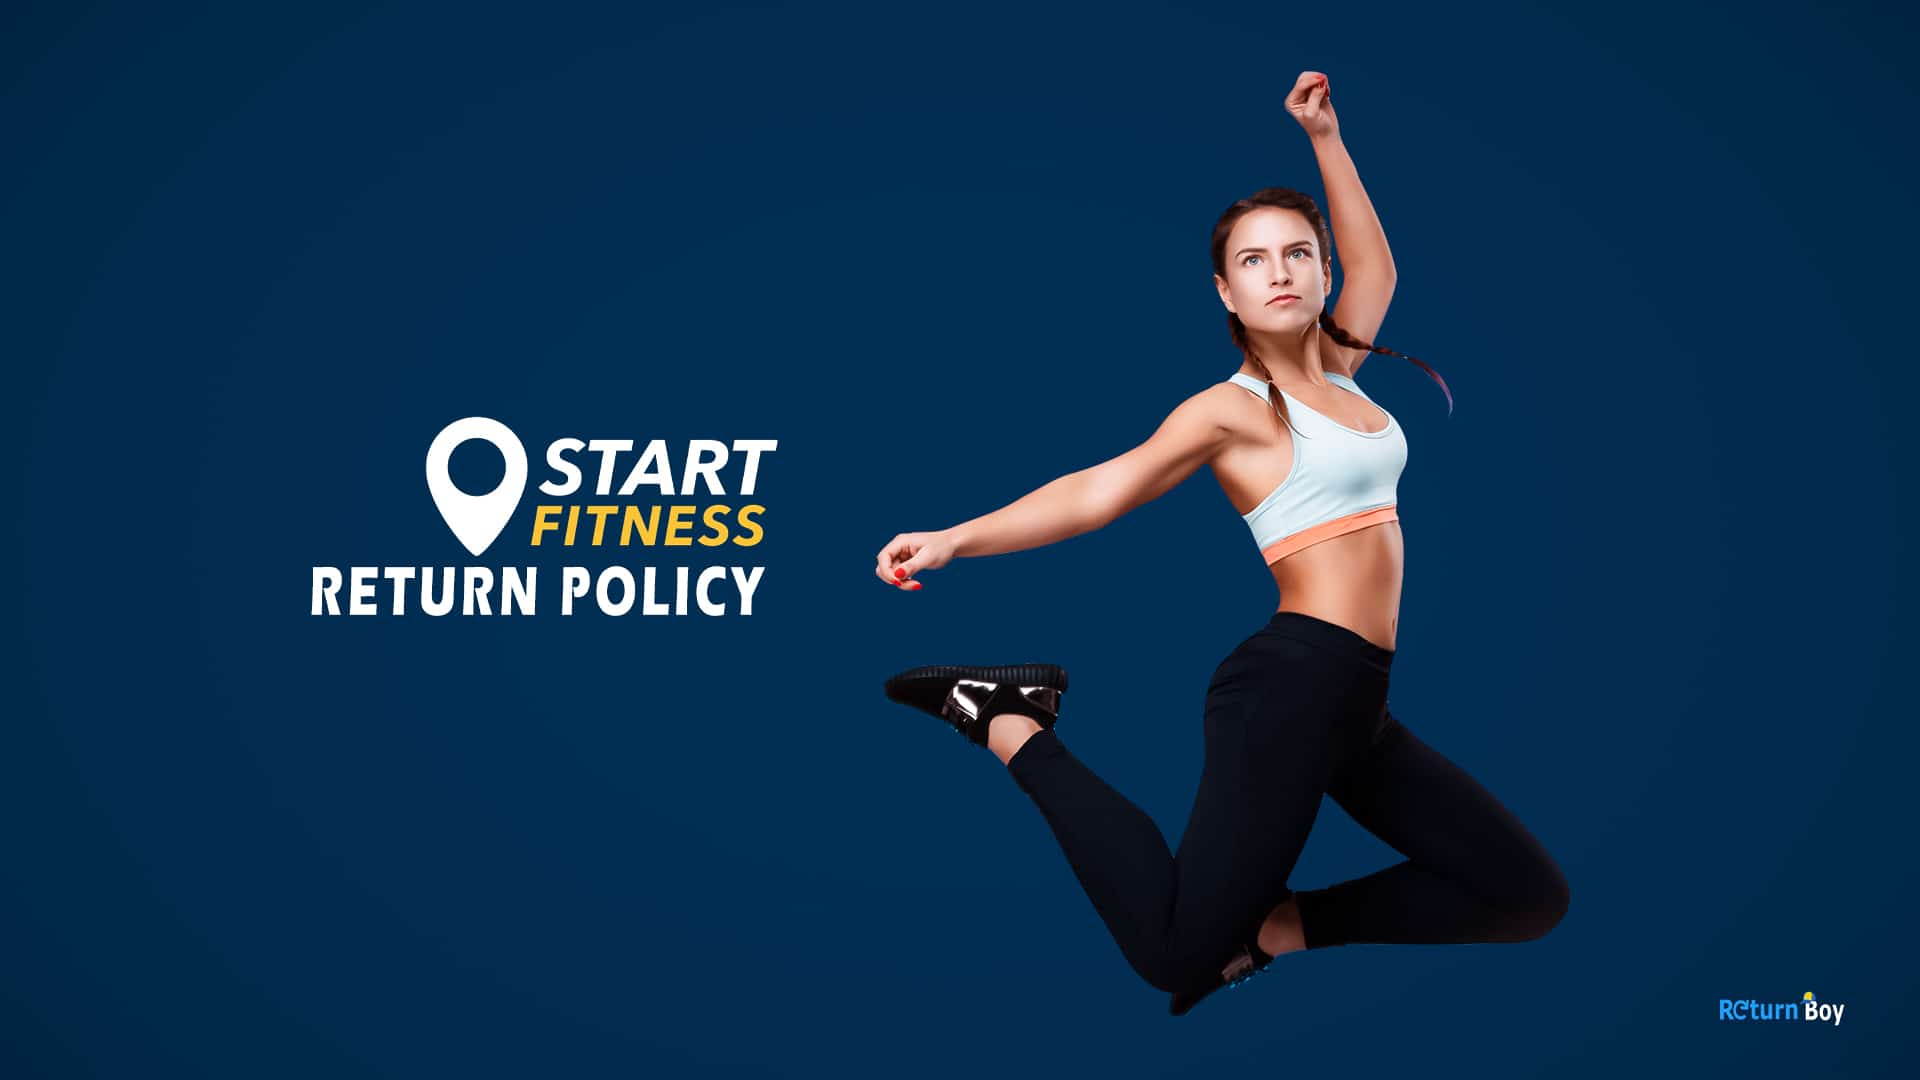 Start Fitness Return Policy